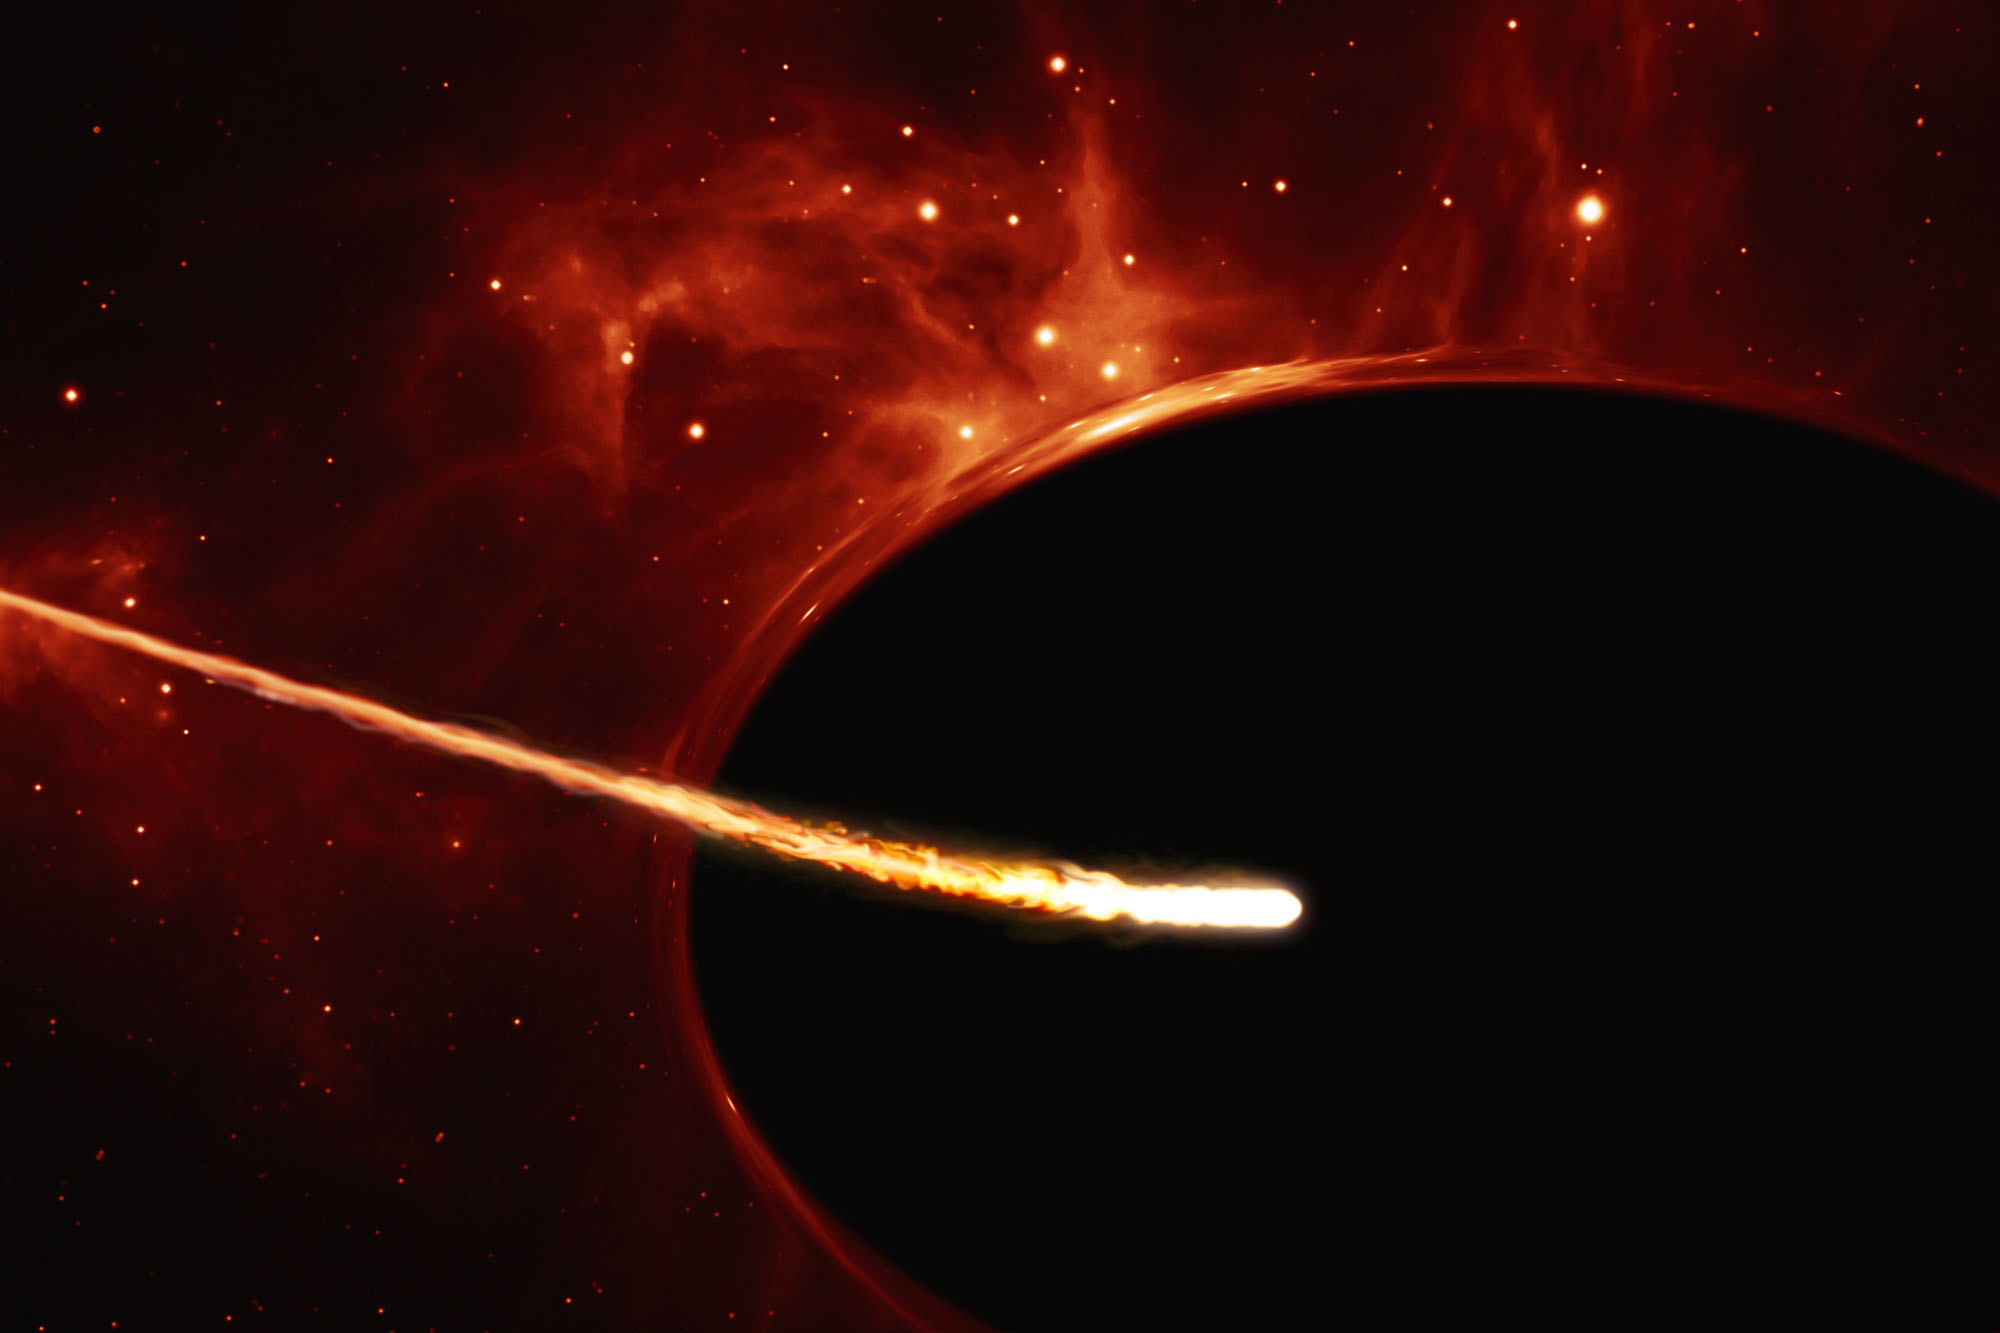 star-shredded-by-spinning-black-hole-illustration-1